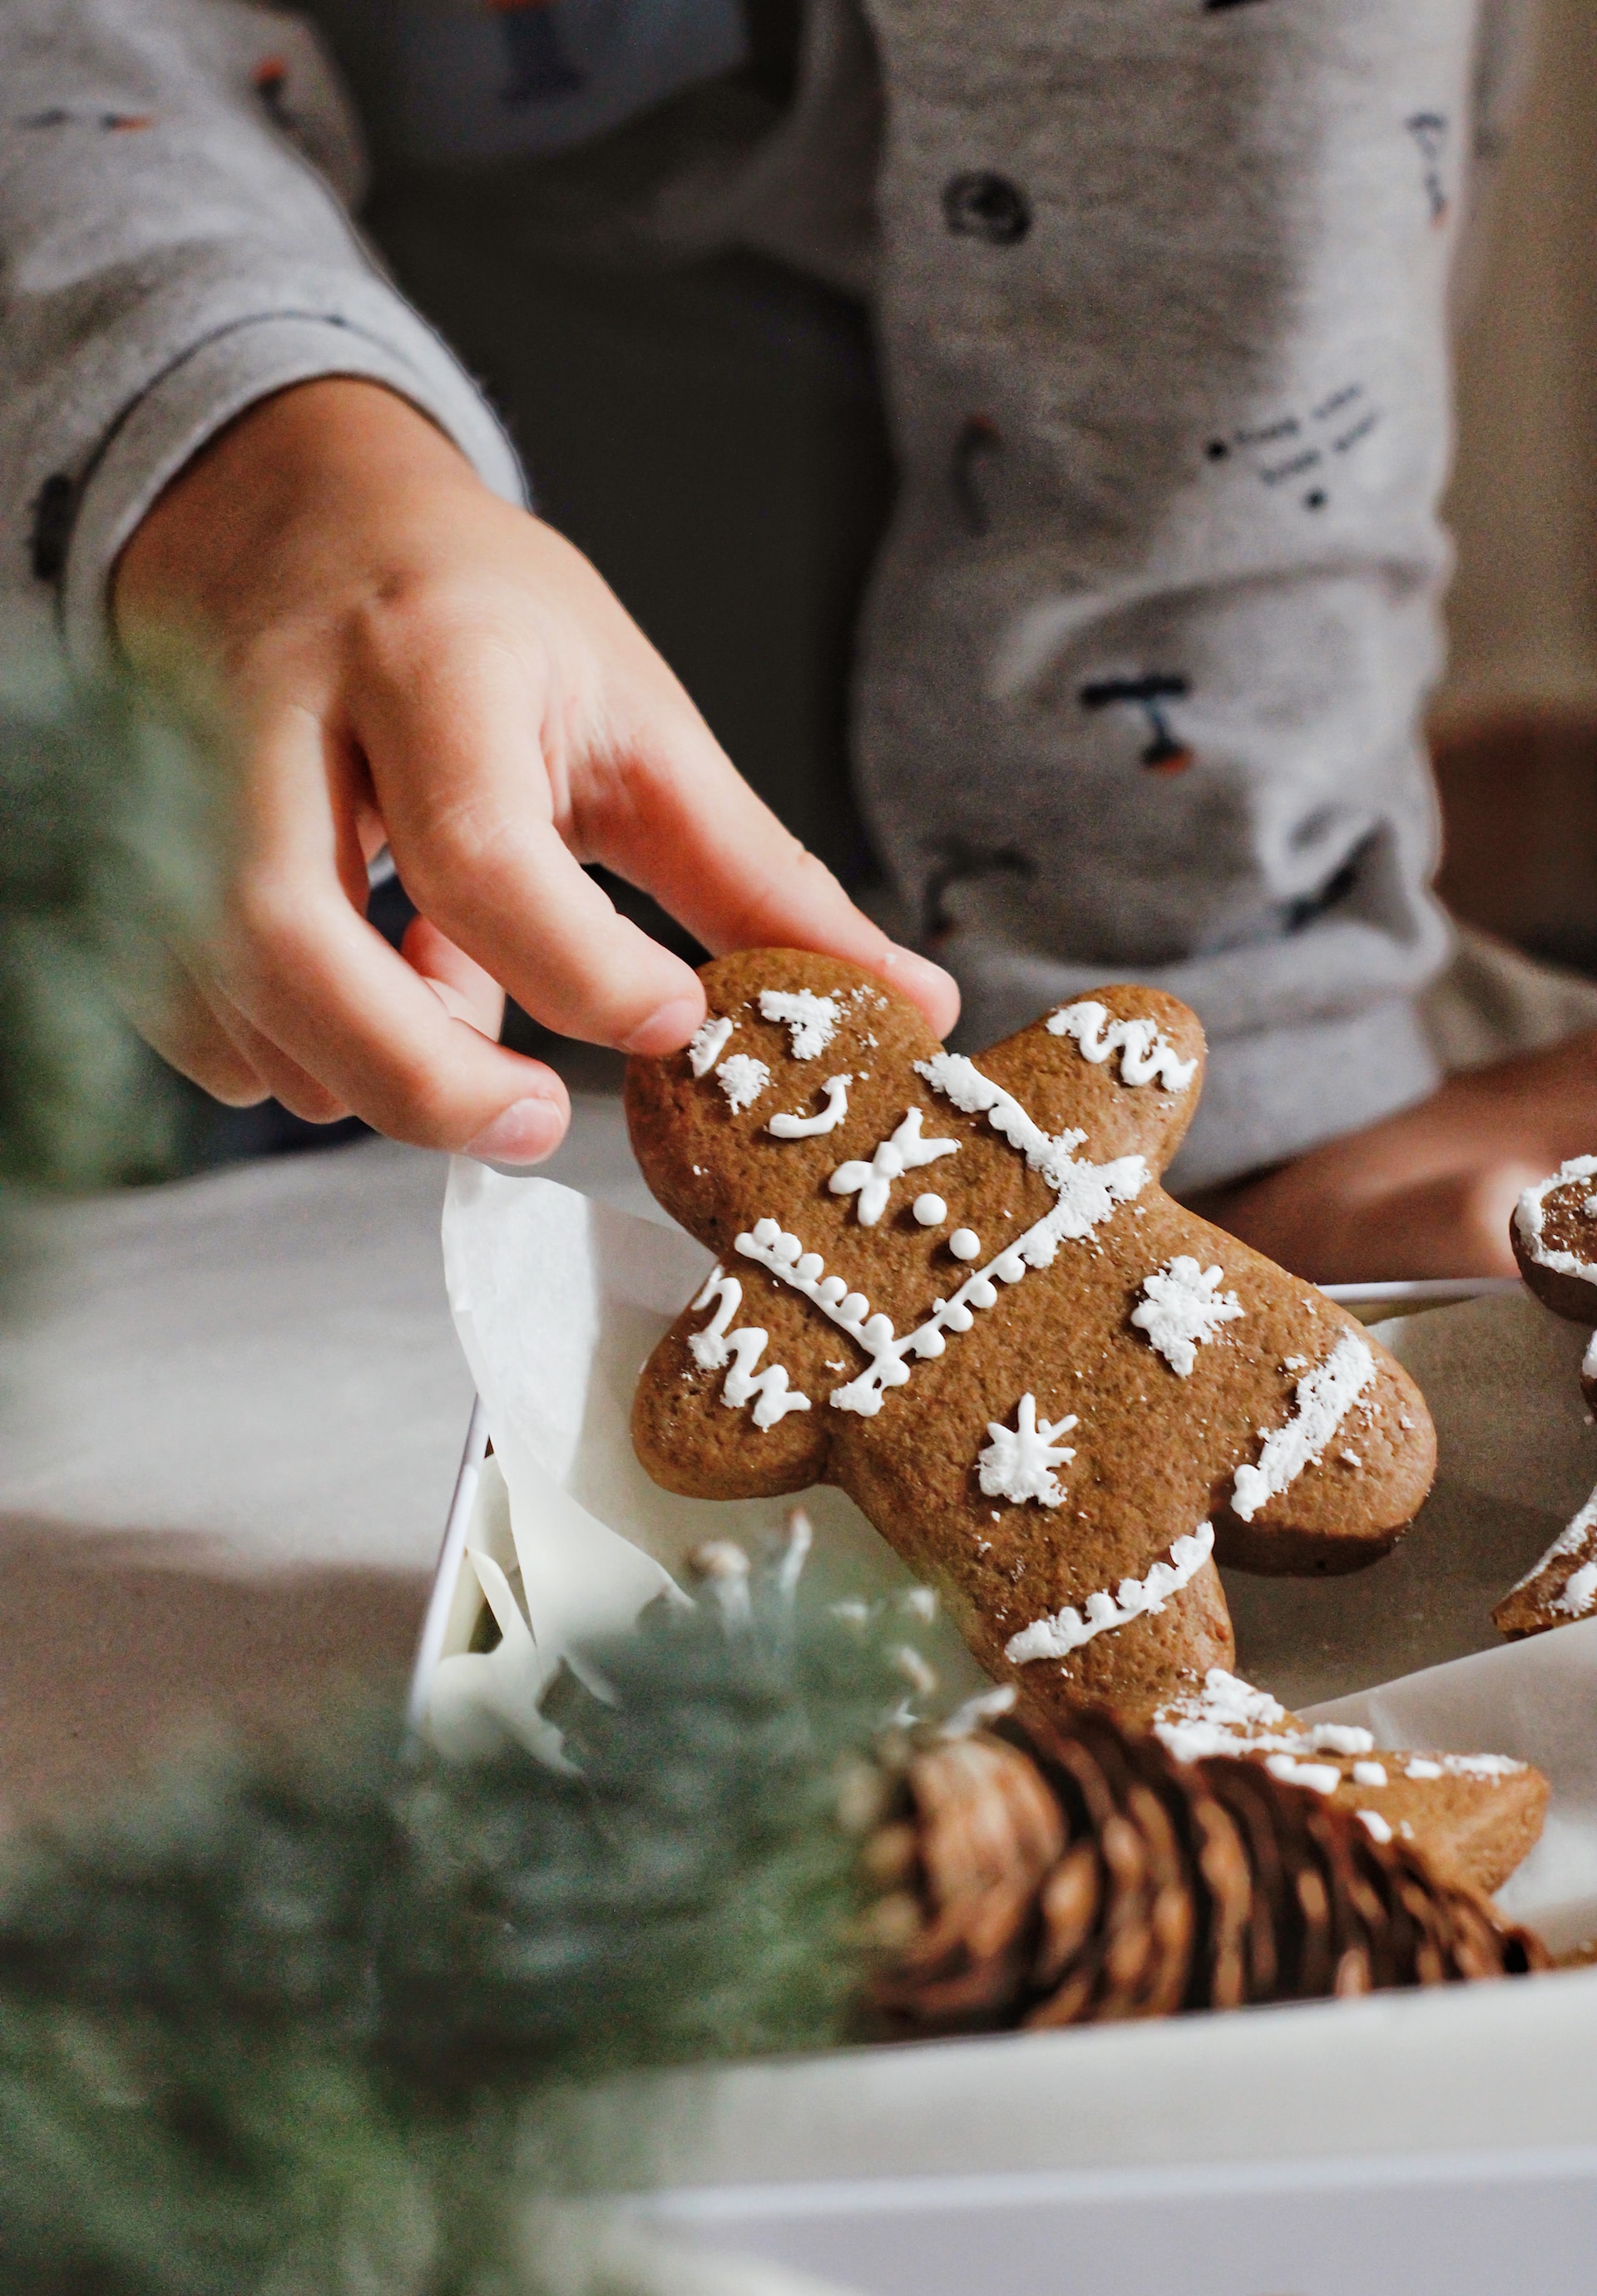 Gingerbread μπισκότα: Η συνταγή και όλα τα μυστικά για να μοσχοβολήσει Χριστούγεννα το σπίτι